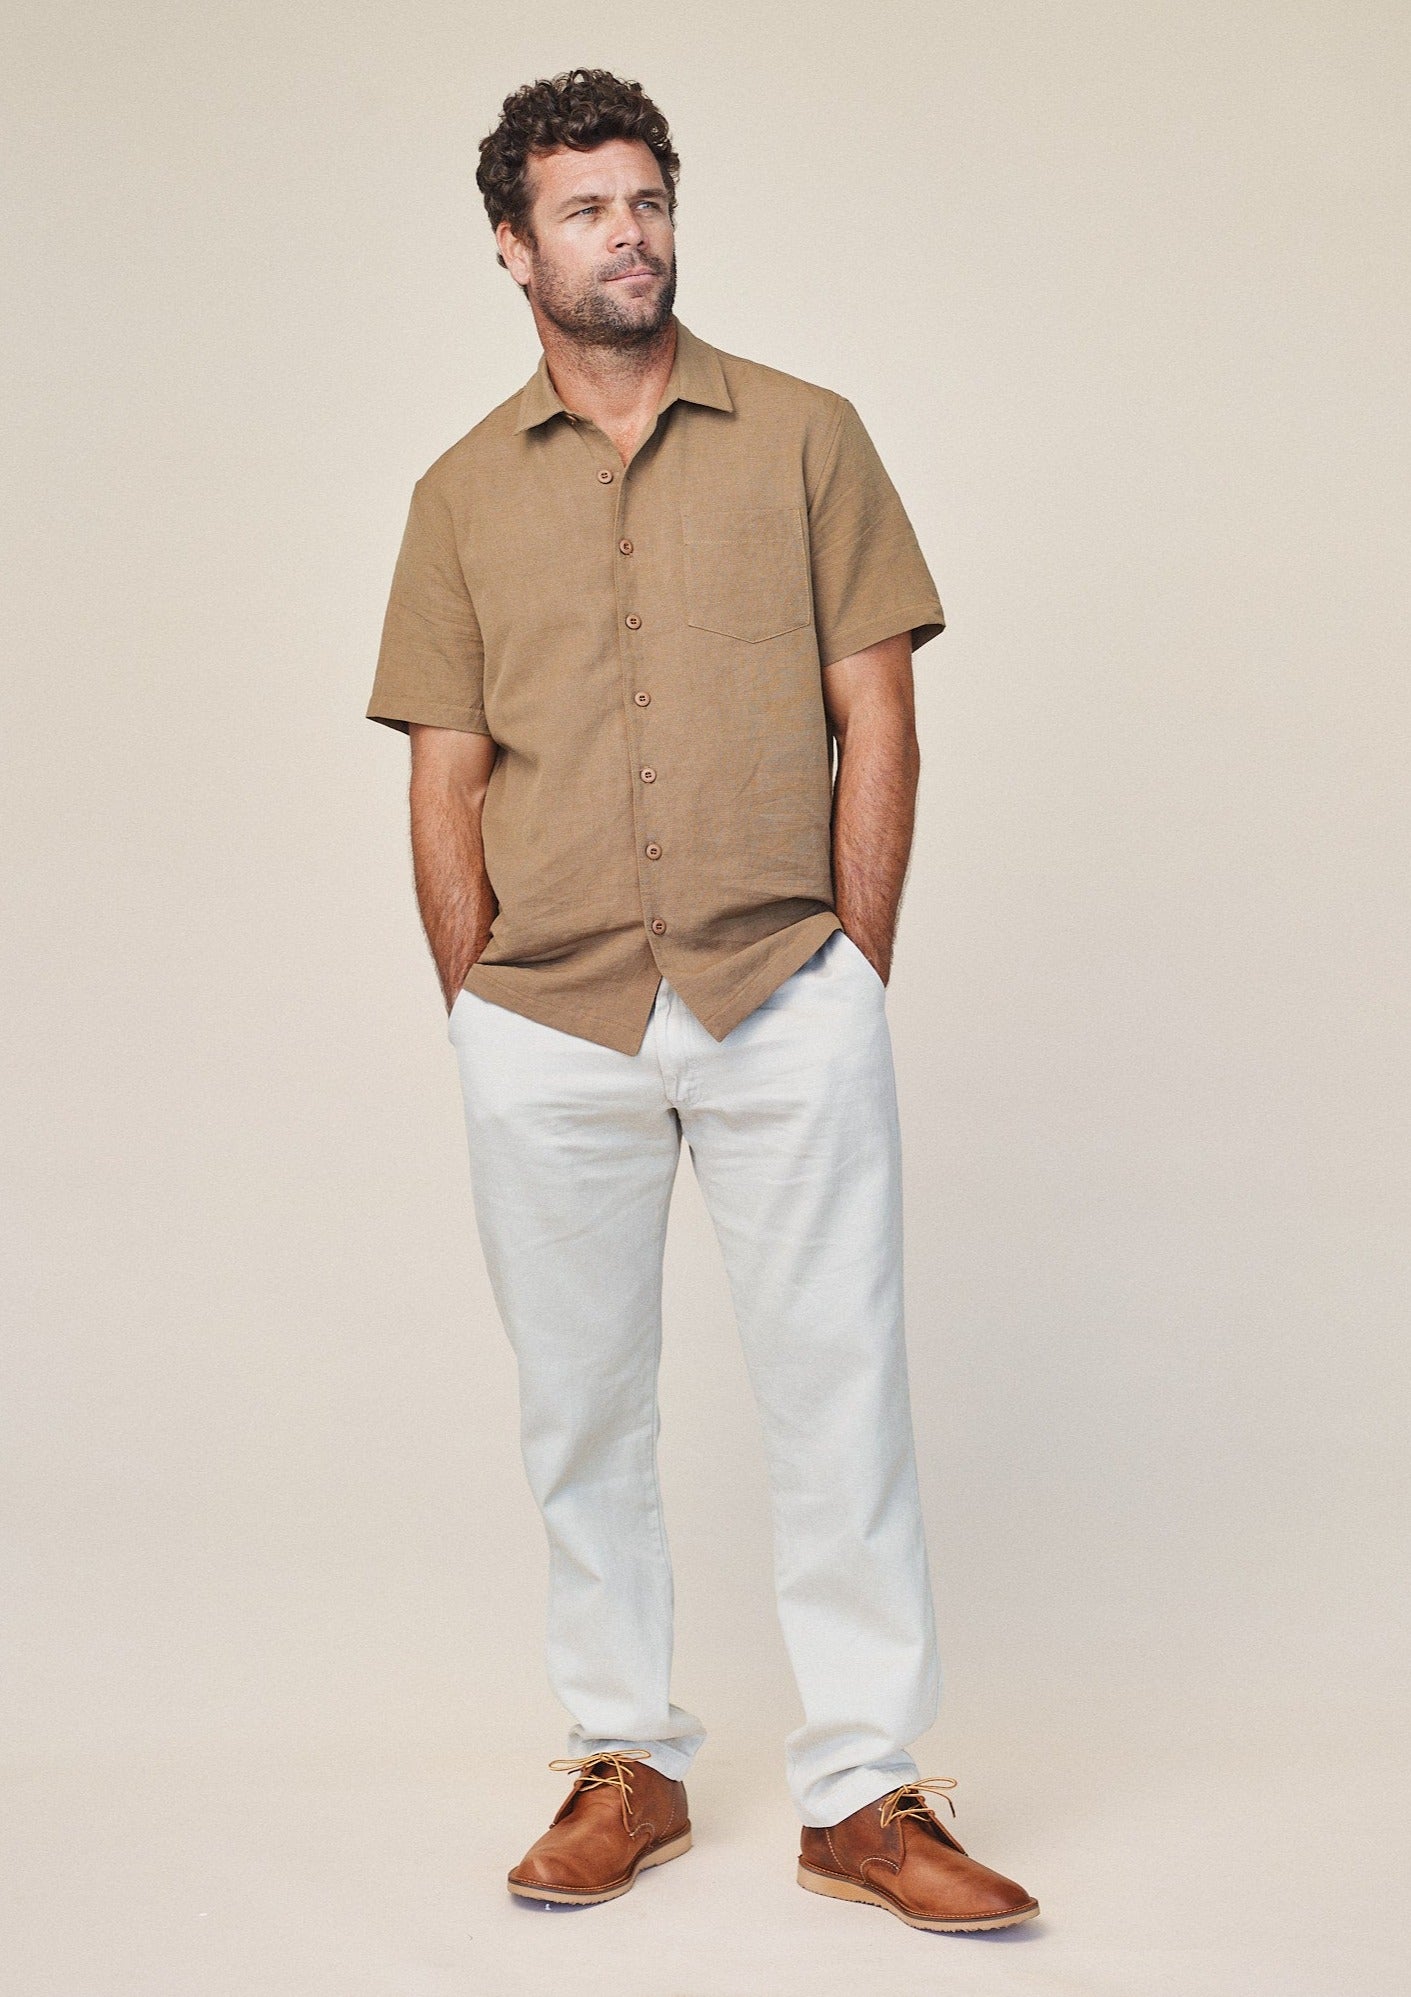 Rincon Shirt | Jungmaven Hemp Clothing & Accessories / model_desc: Scott is 6’1” wearing L